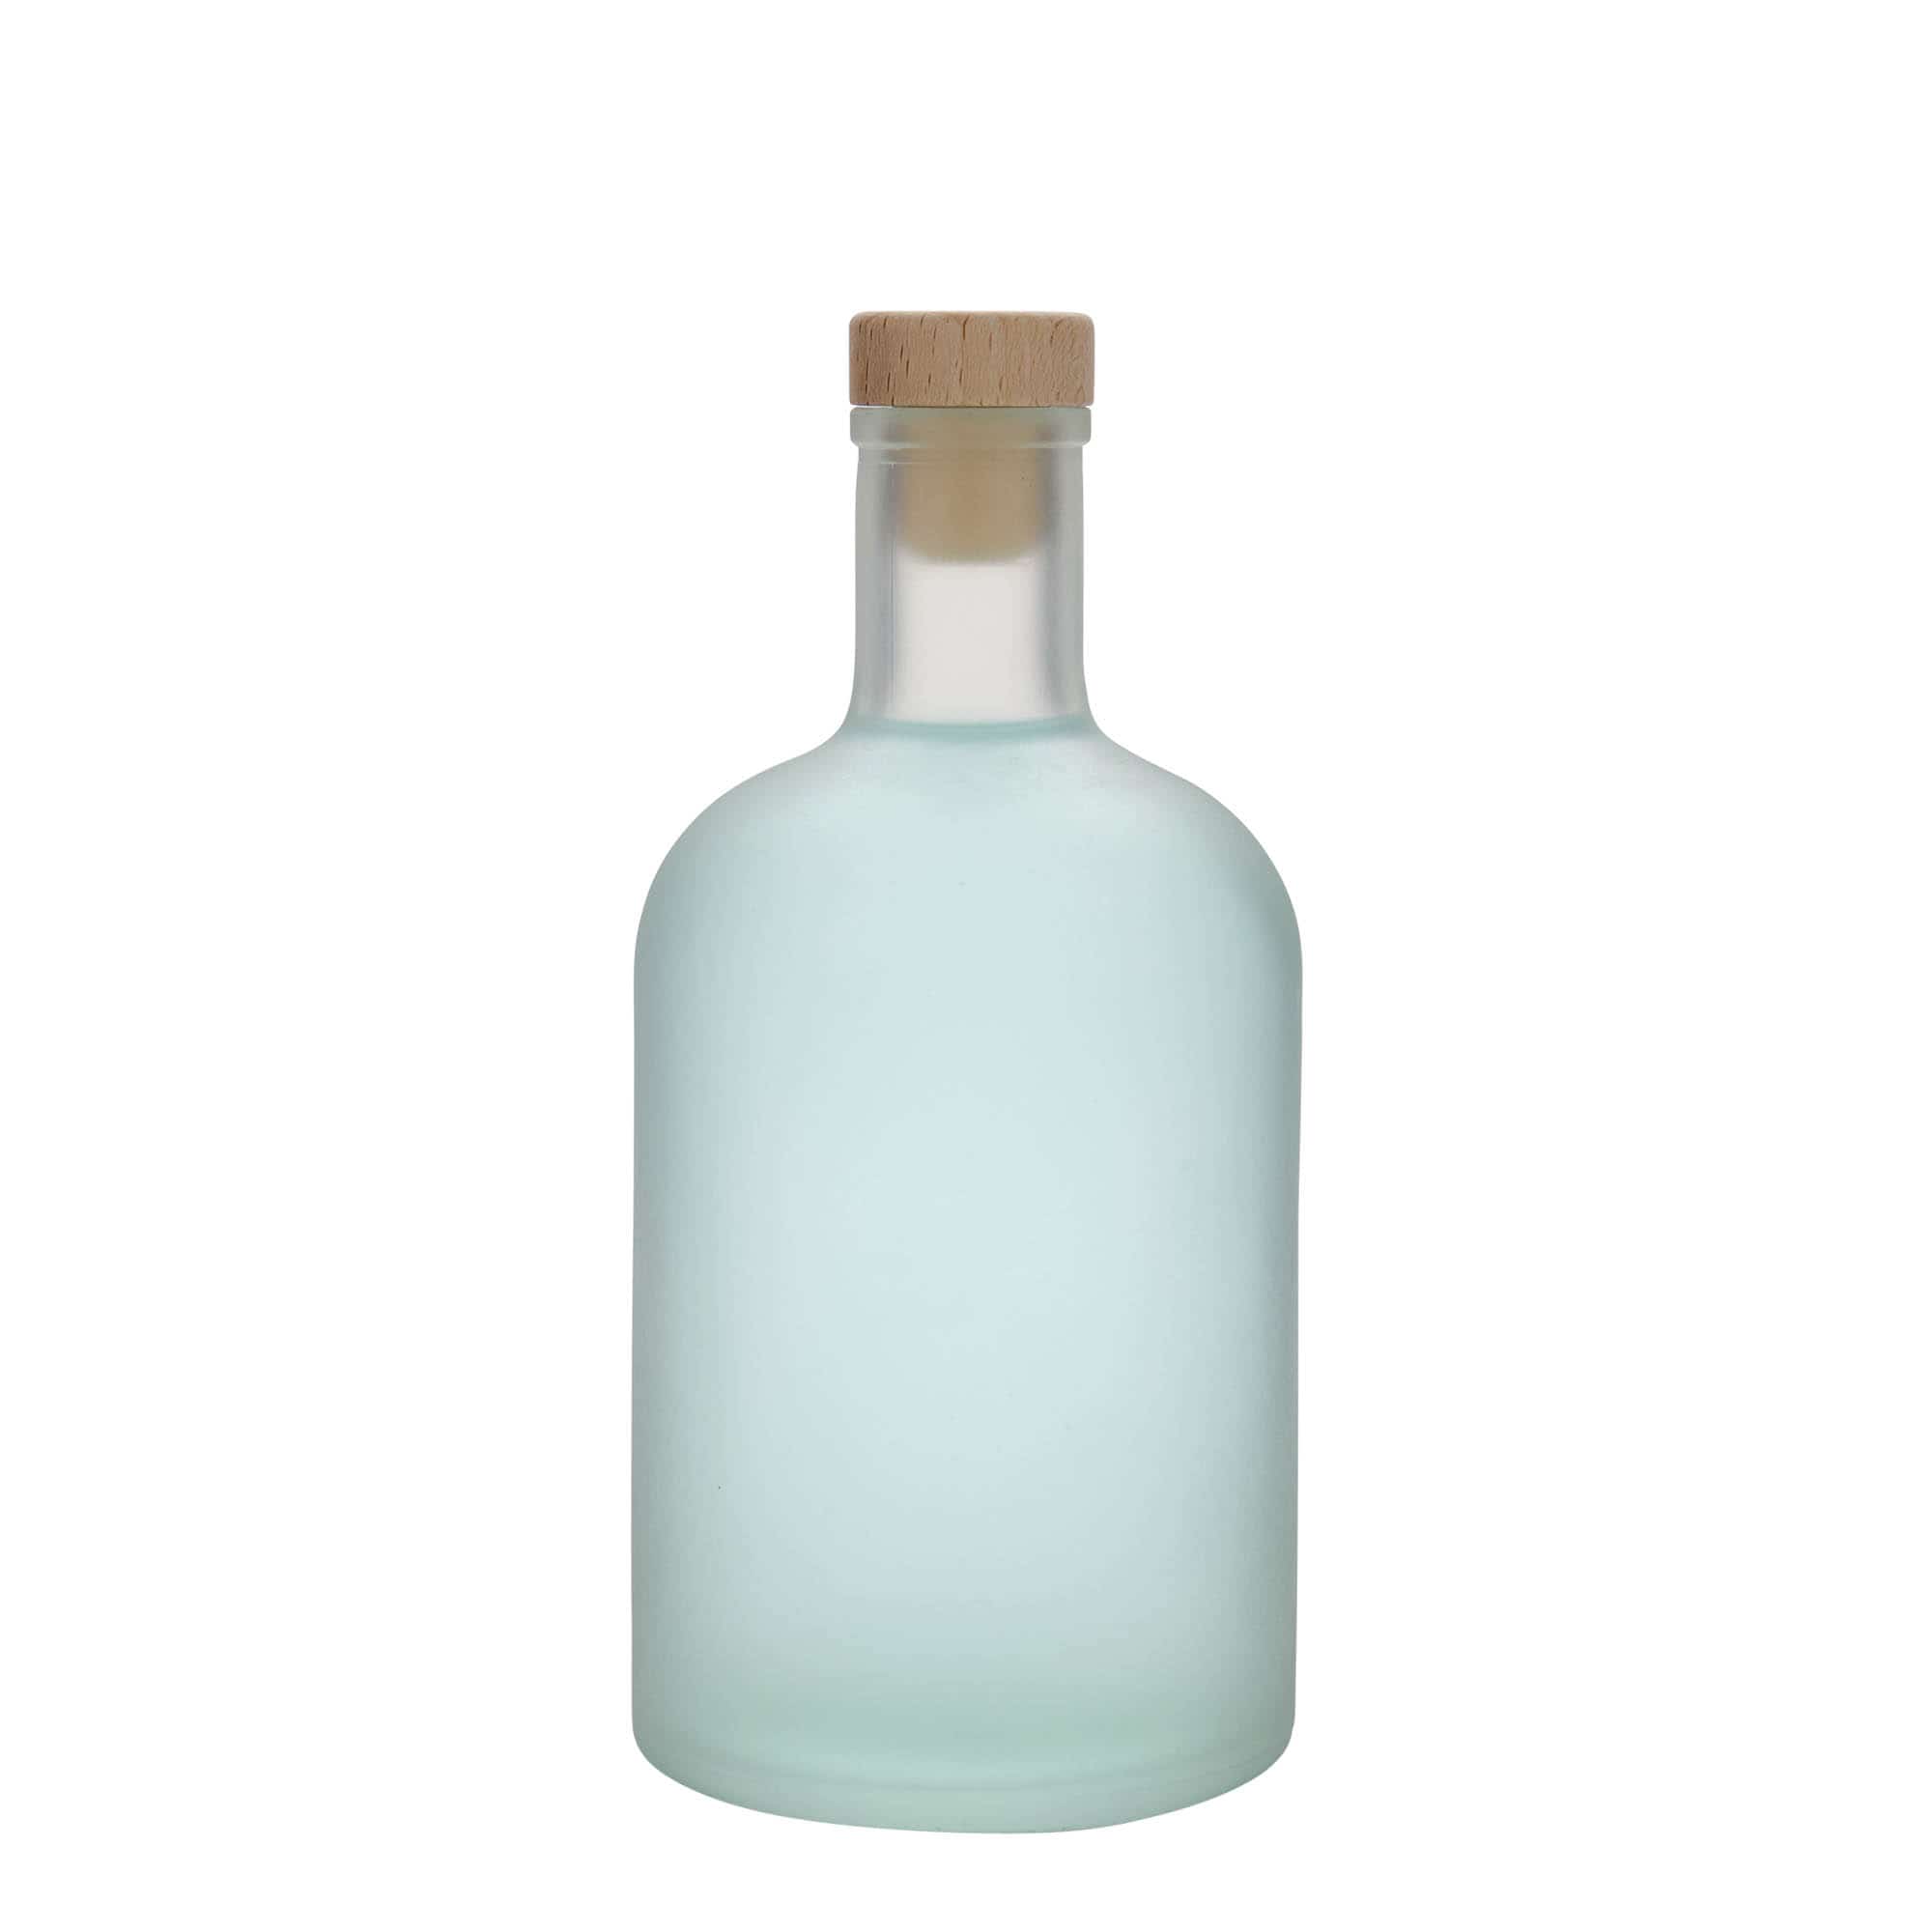 700 ml glass bottle 'Gerardino', frosted, closure: cork